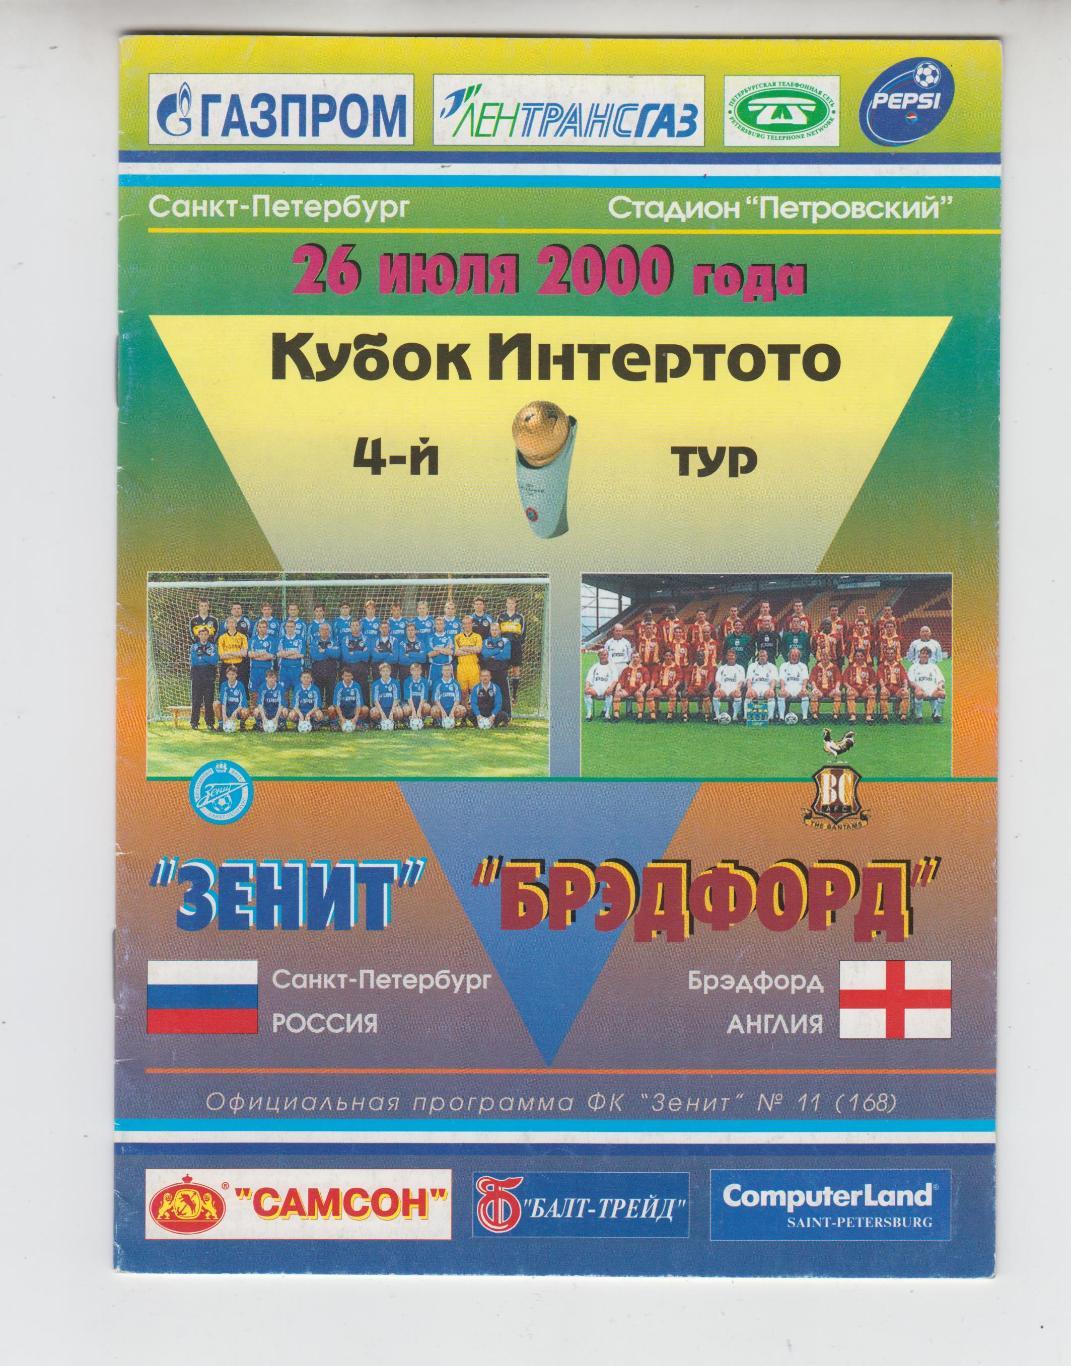 Зенит Россия -Брэдфорд Англия 2000 кубок Интертото УЕФА